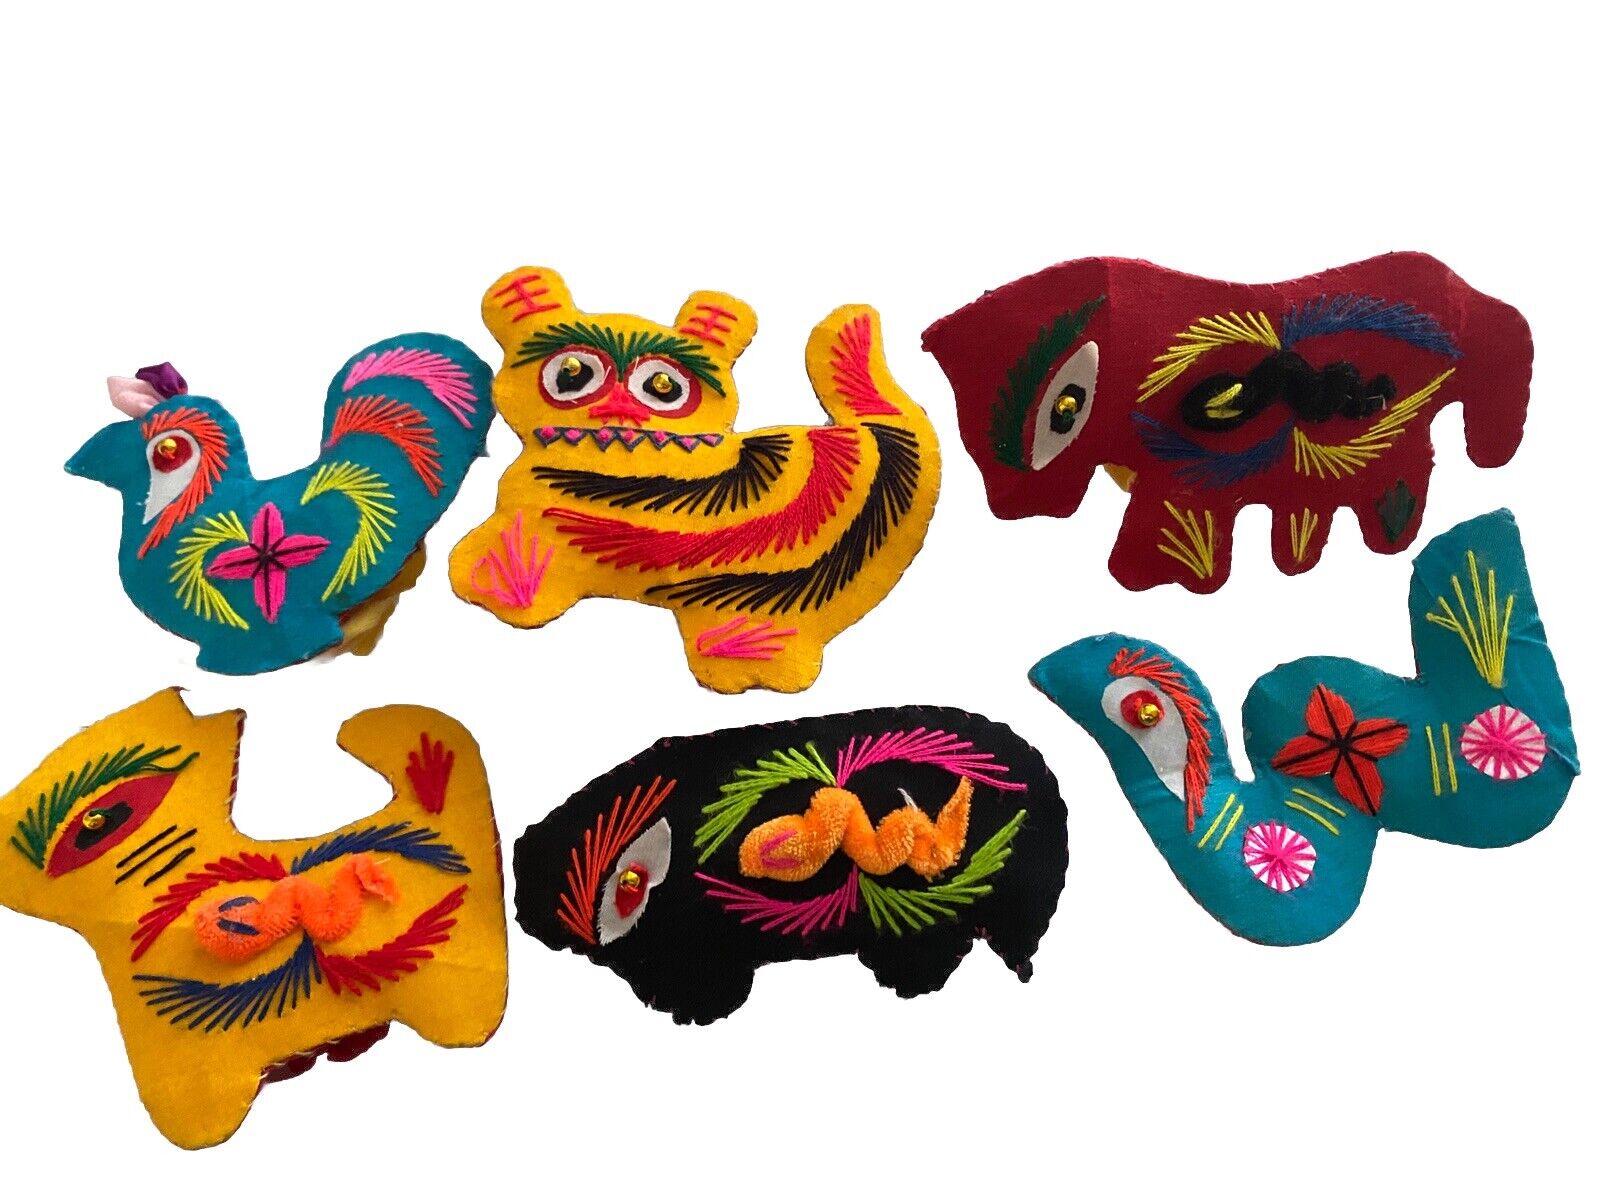 Chinese Zodiac Decorative Figures